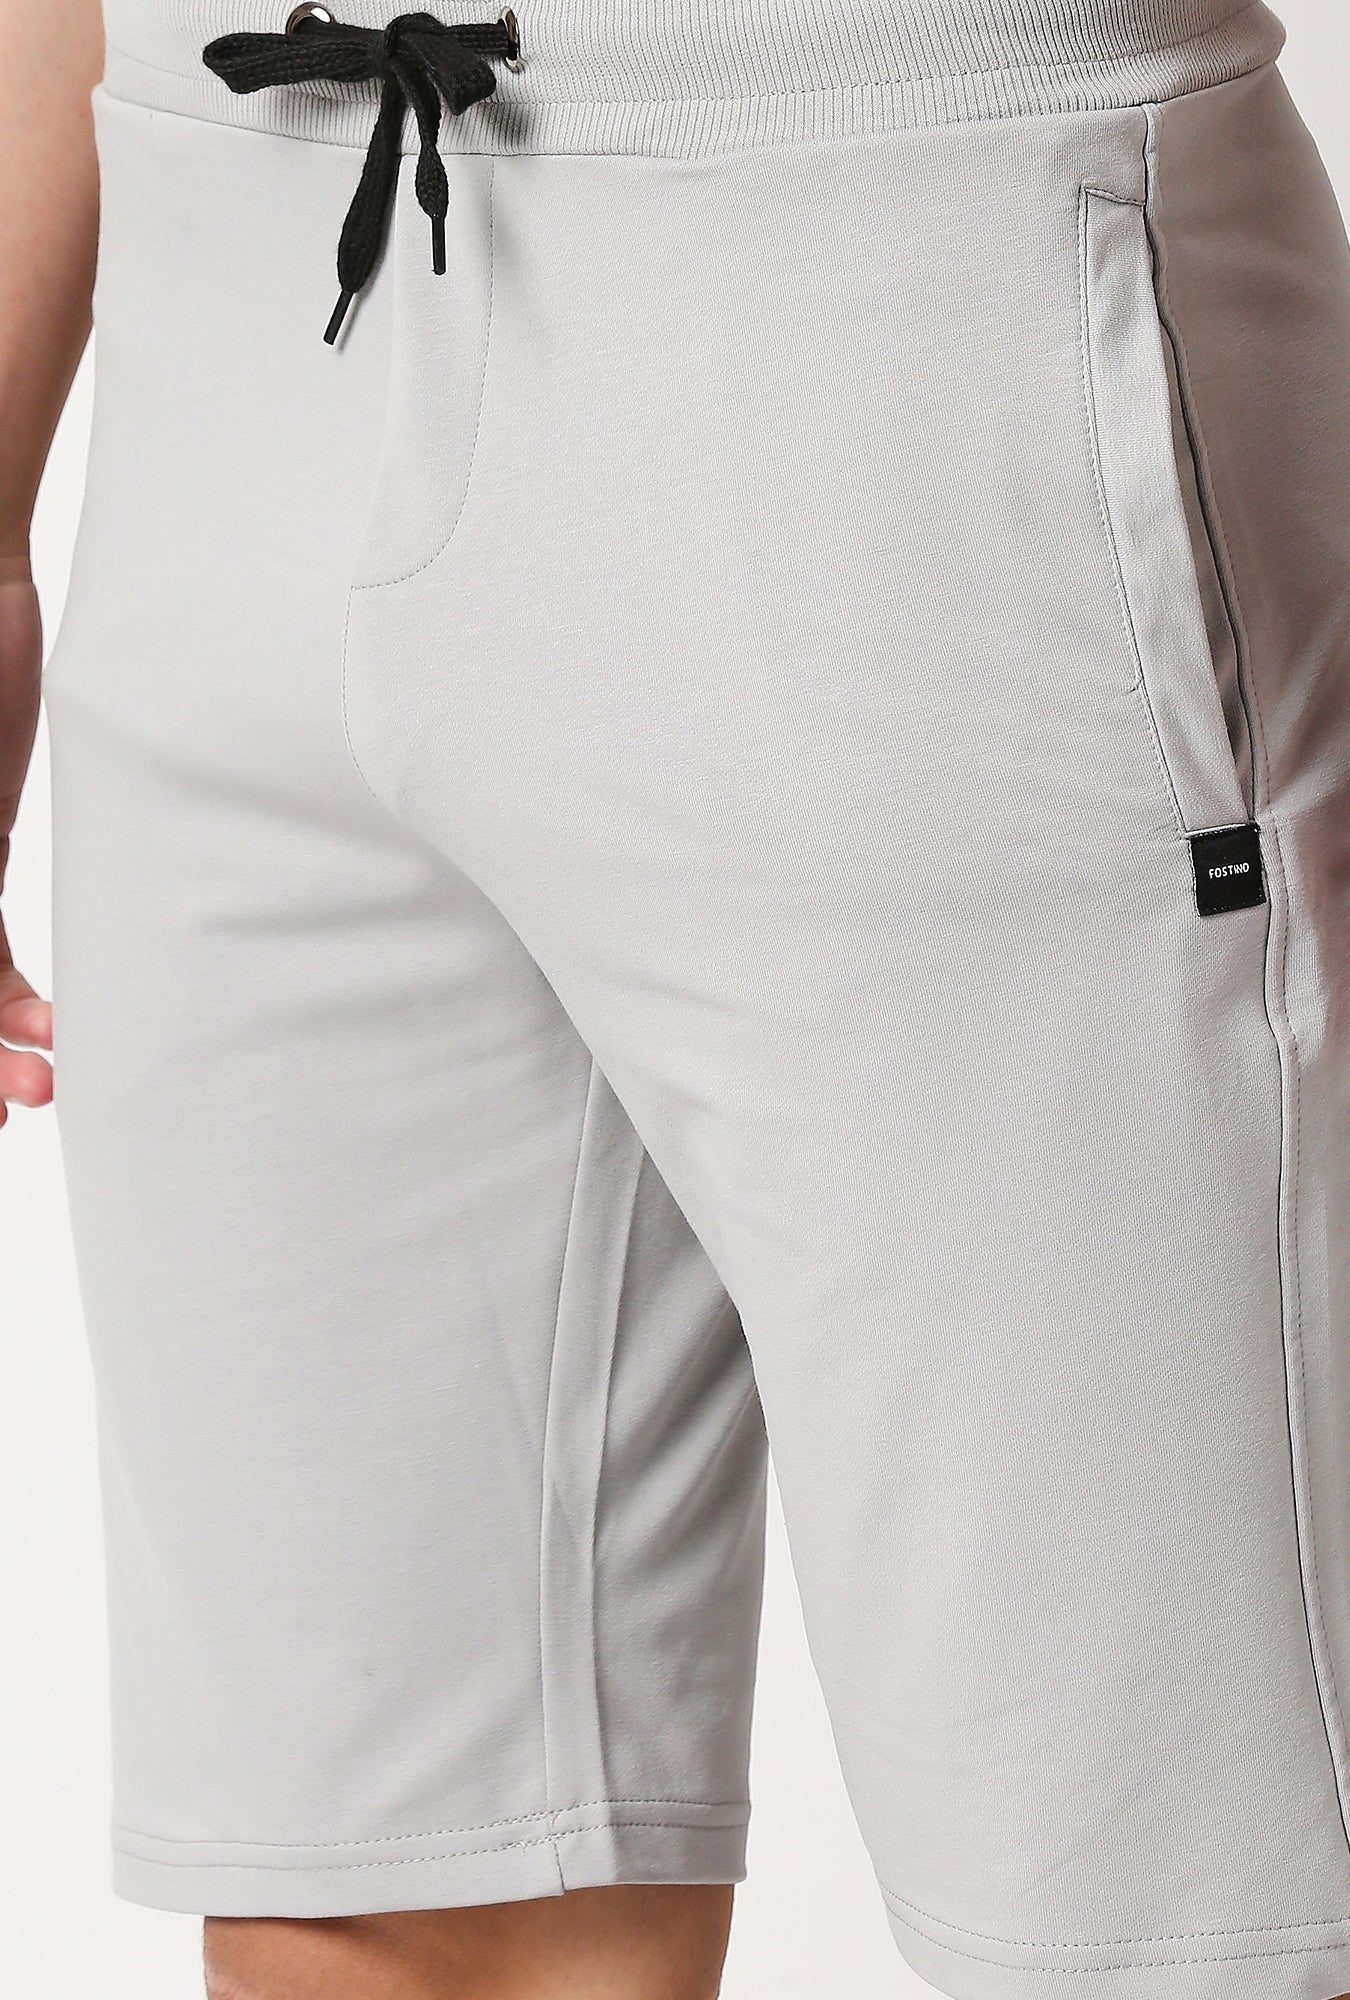 Fostino Shanghai Plain Grey Short - Fostino - Shorts